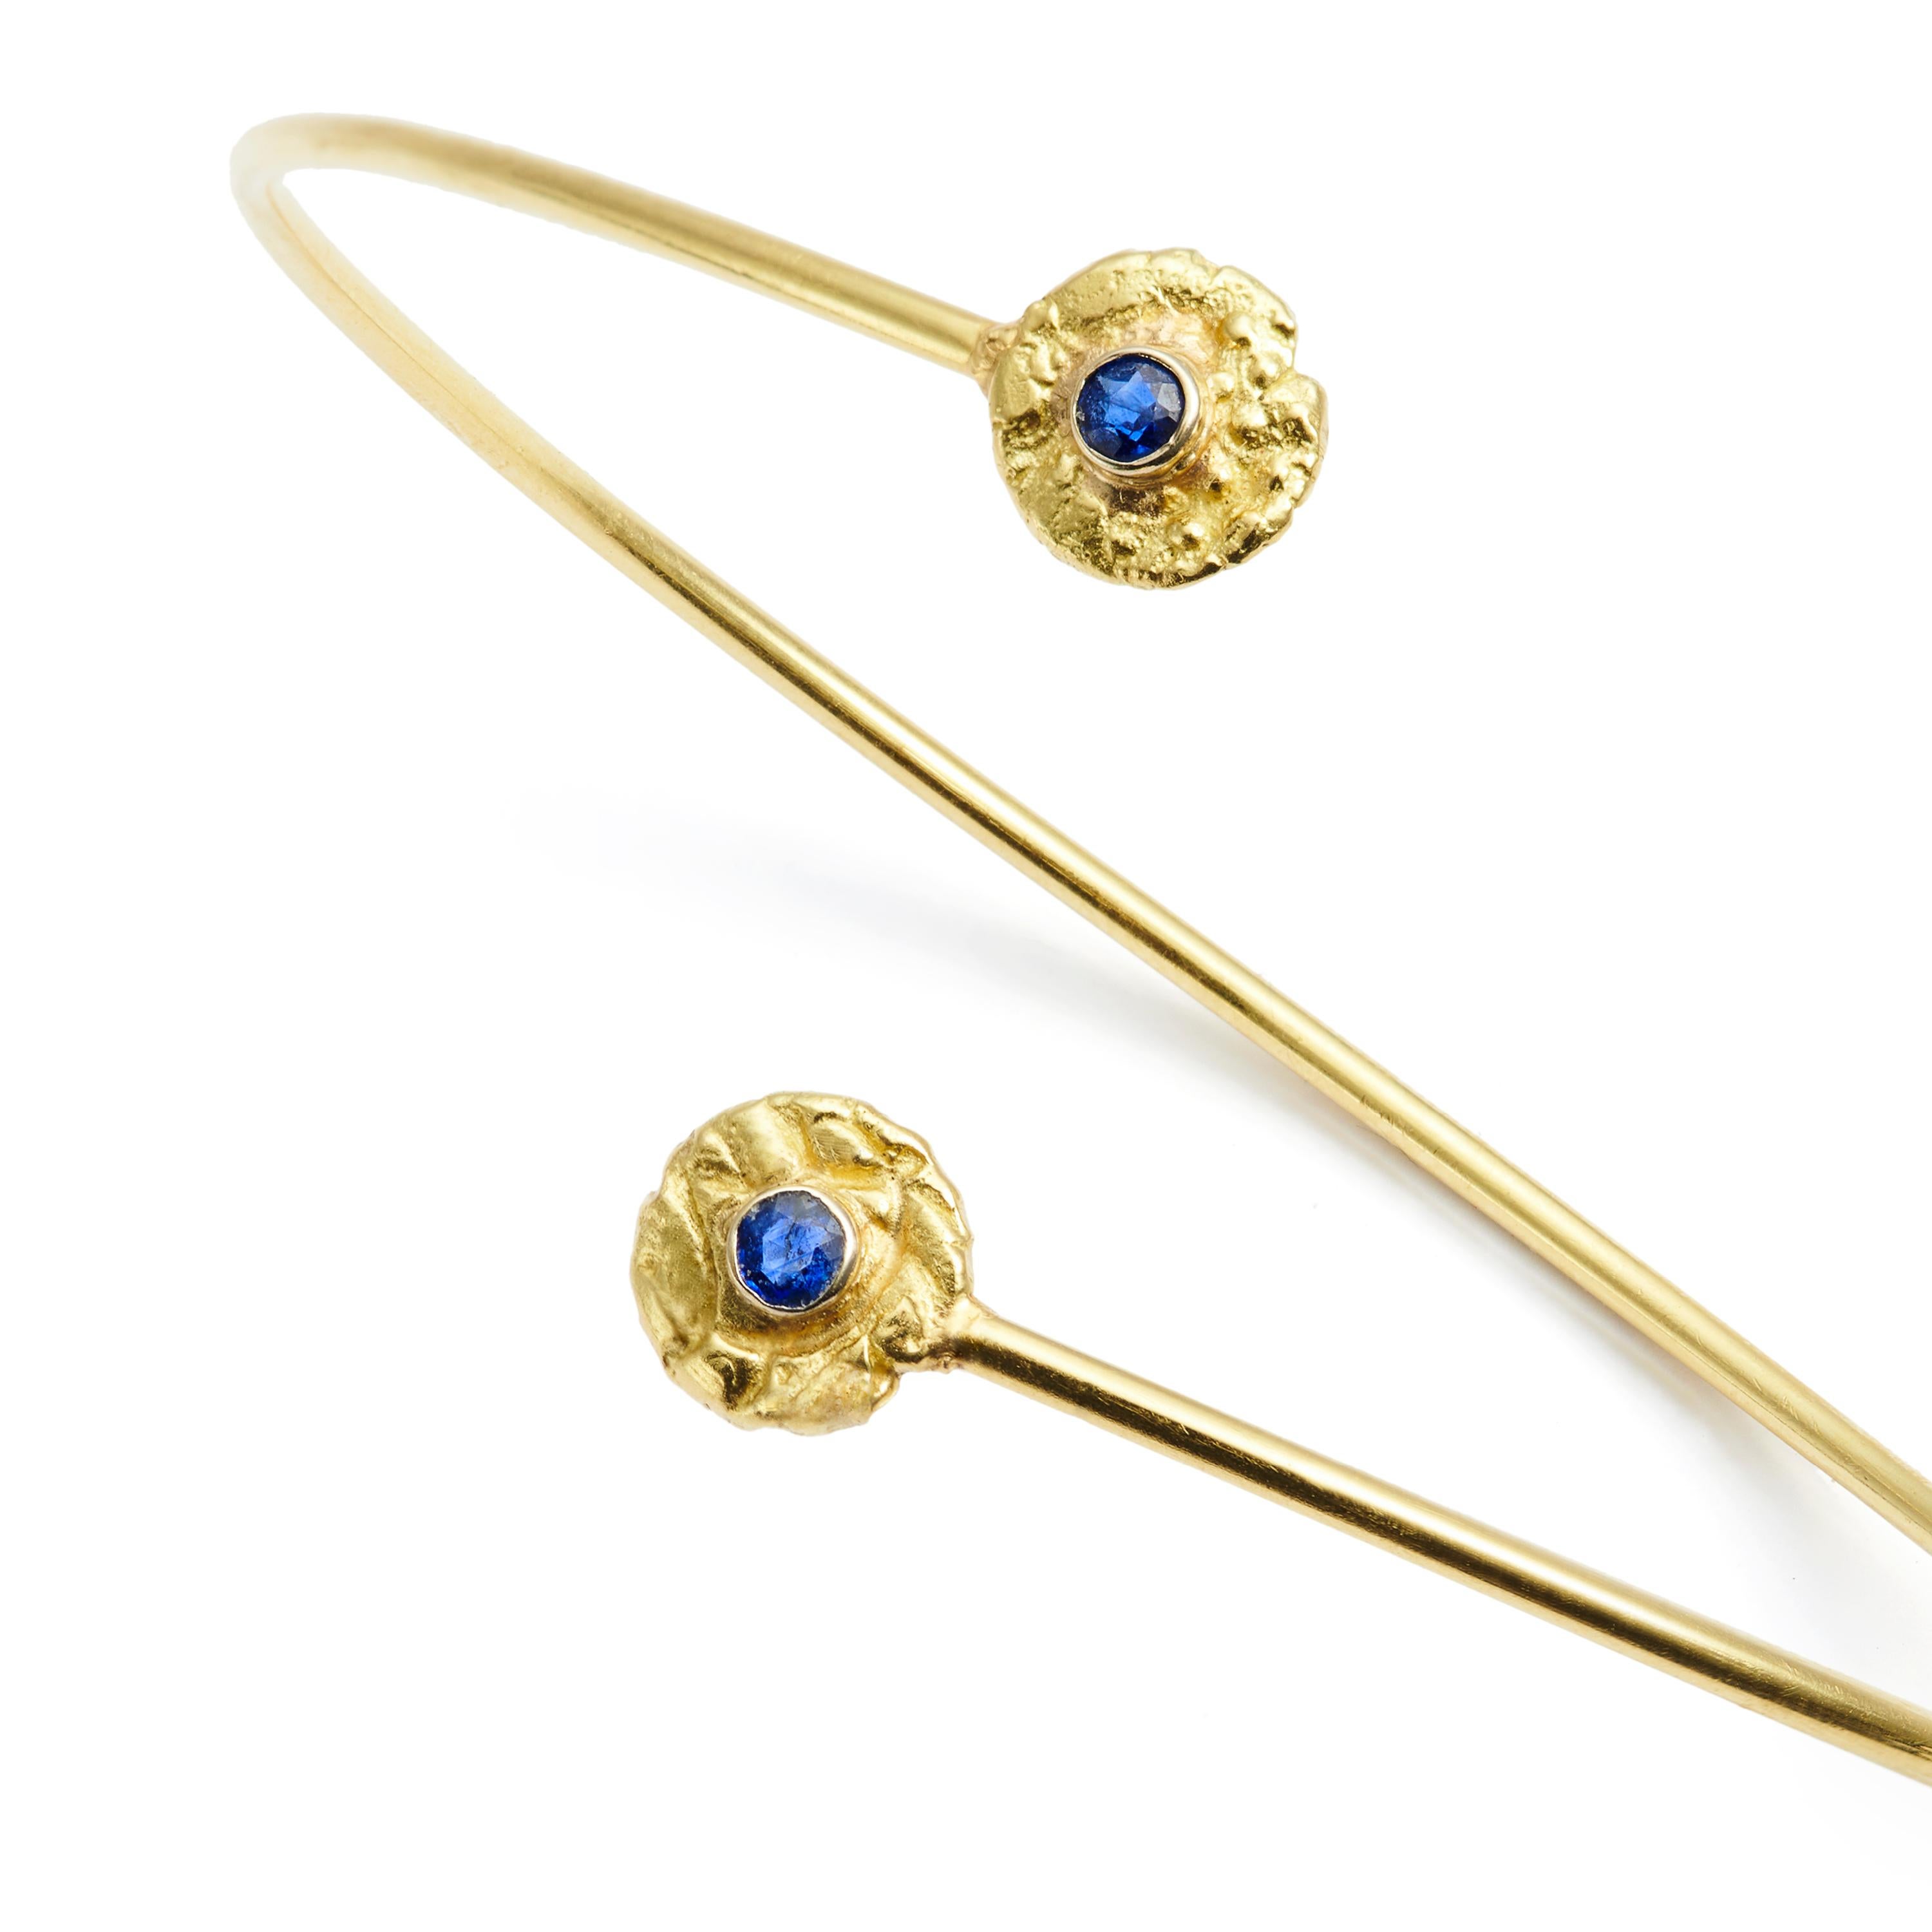 Brilliant Cut Susan Lister Locke “Seaquin” Bypass Bangle Bracelet & Blue Sapphires in 18K Gold For Sale